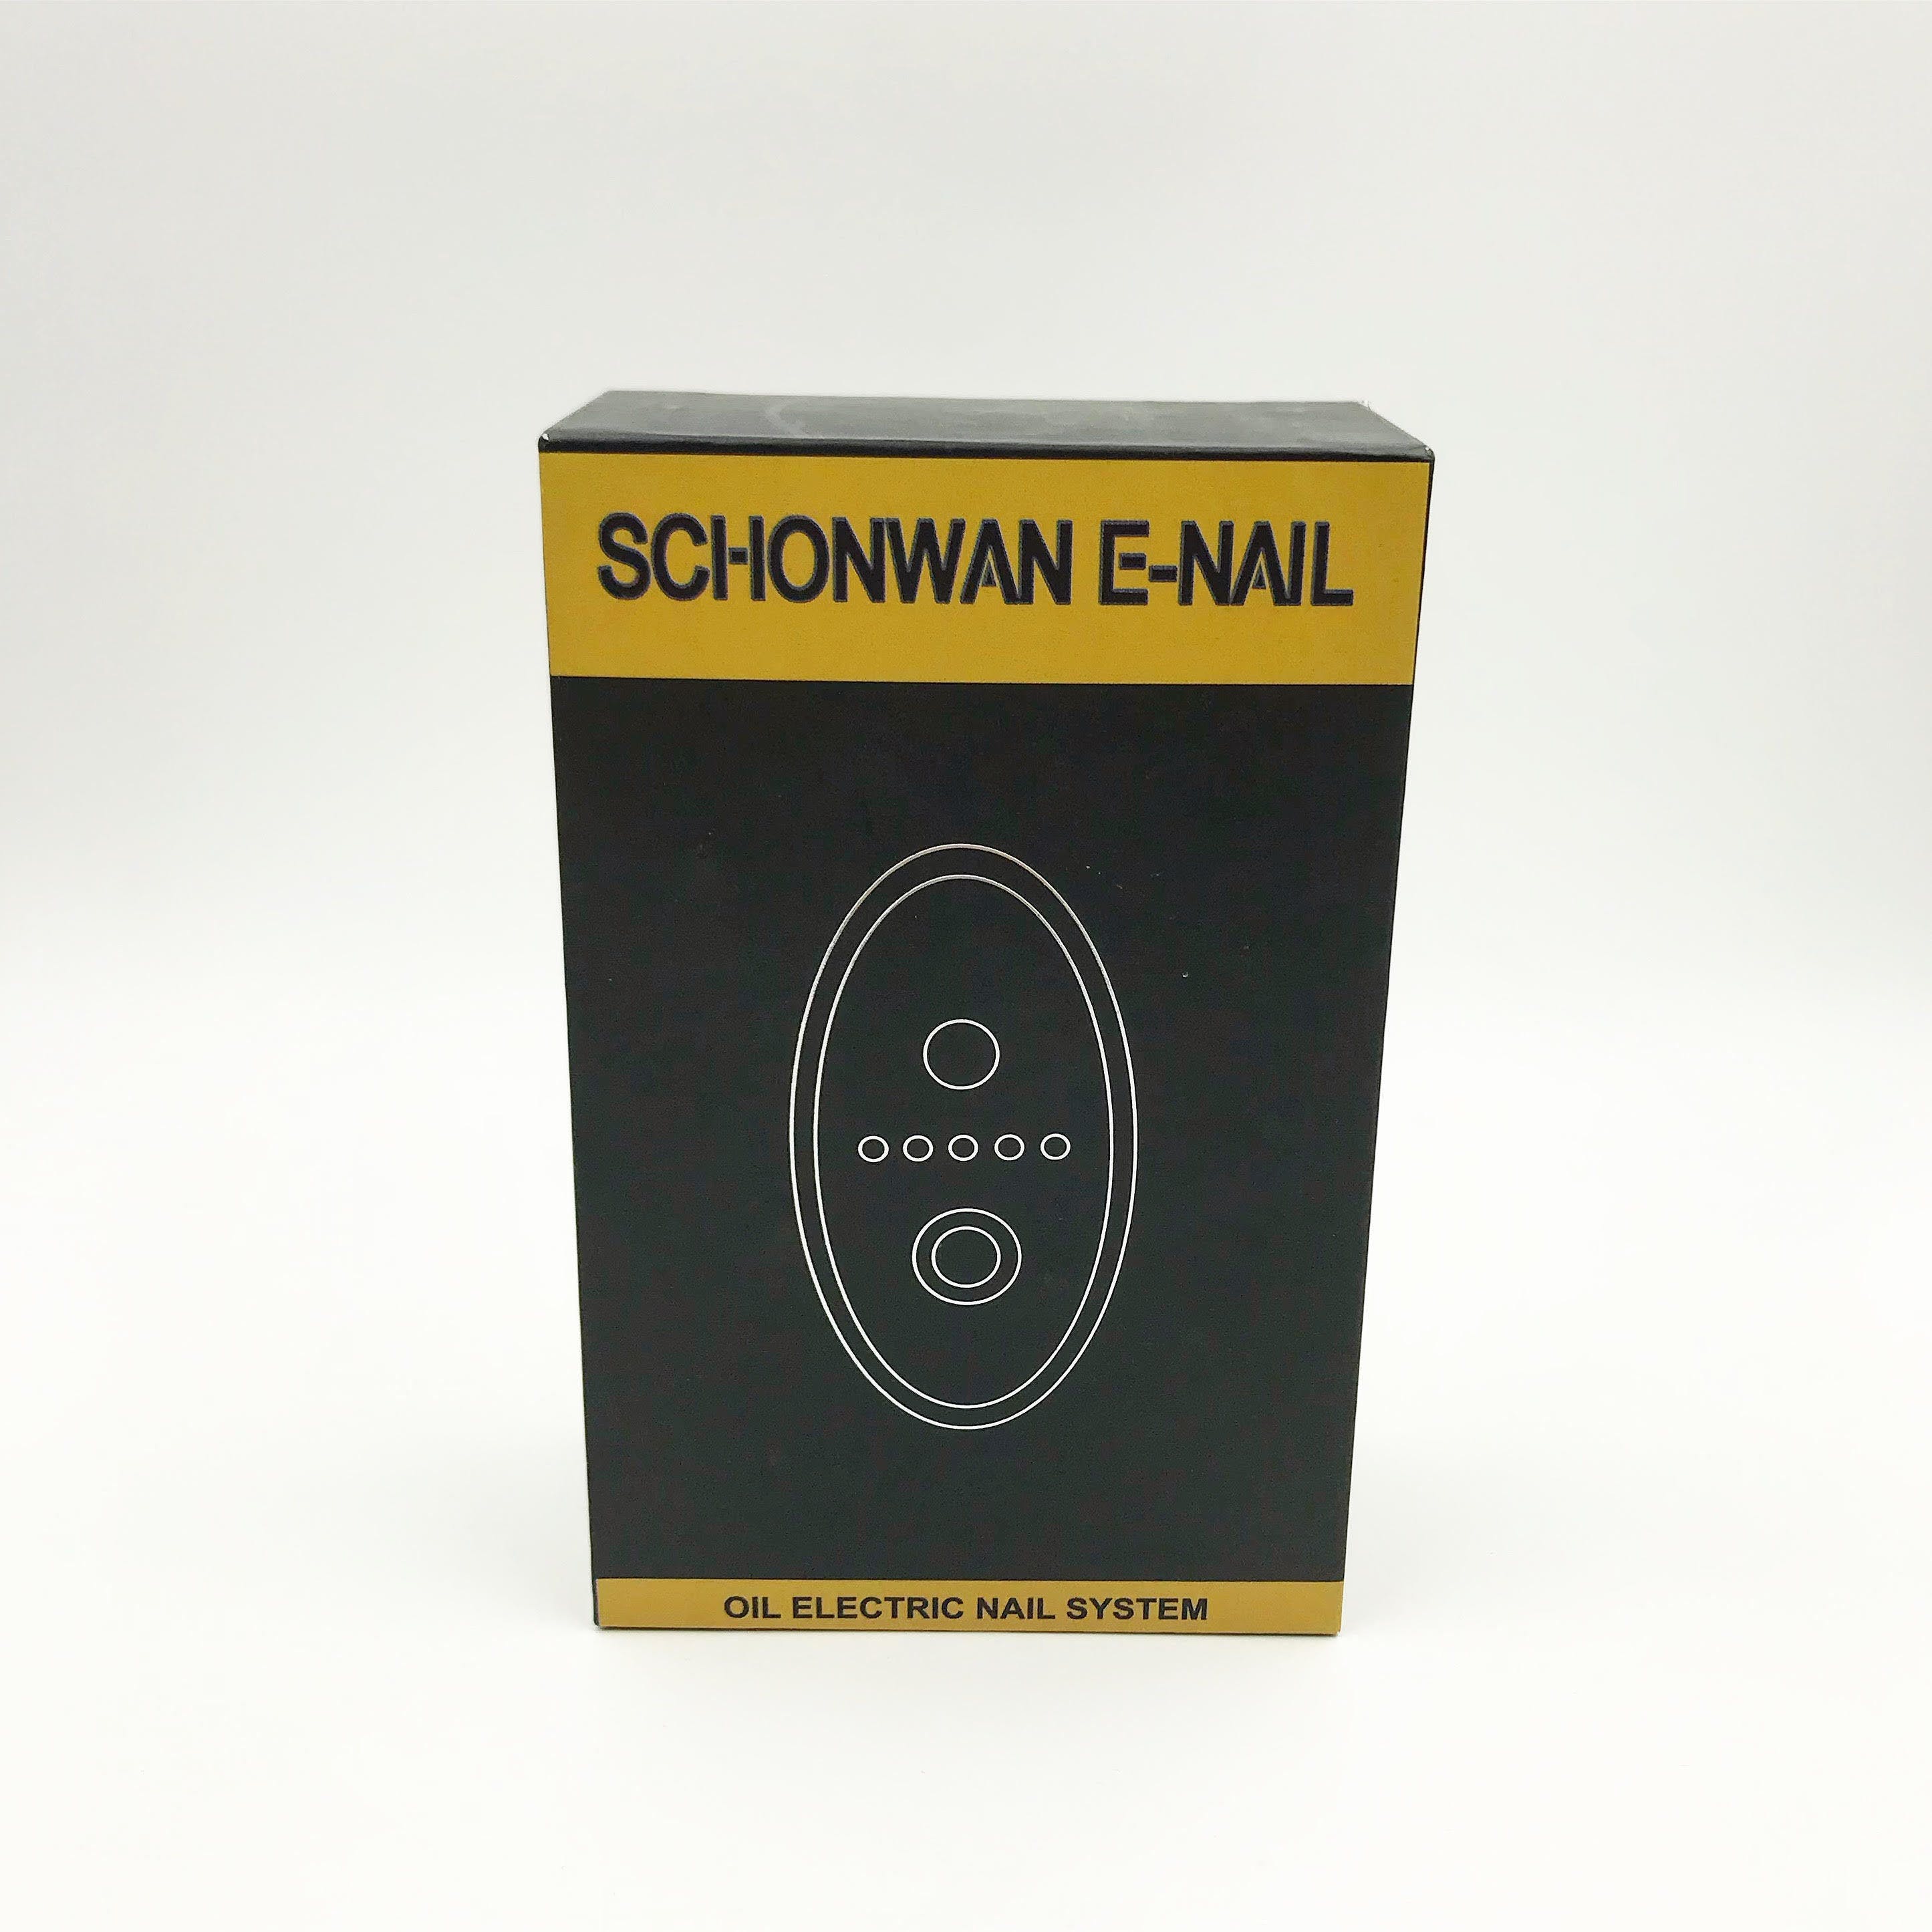 Schonwan E-nail